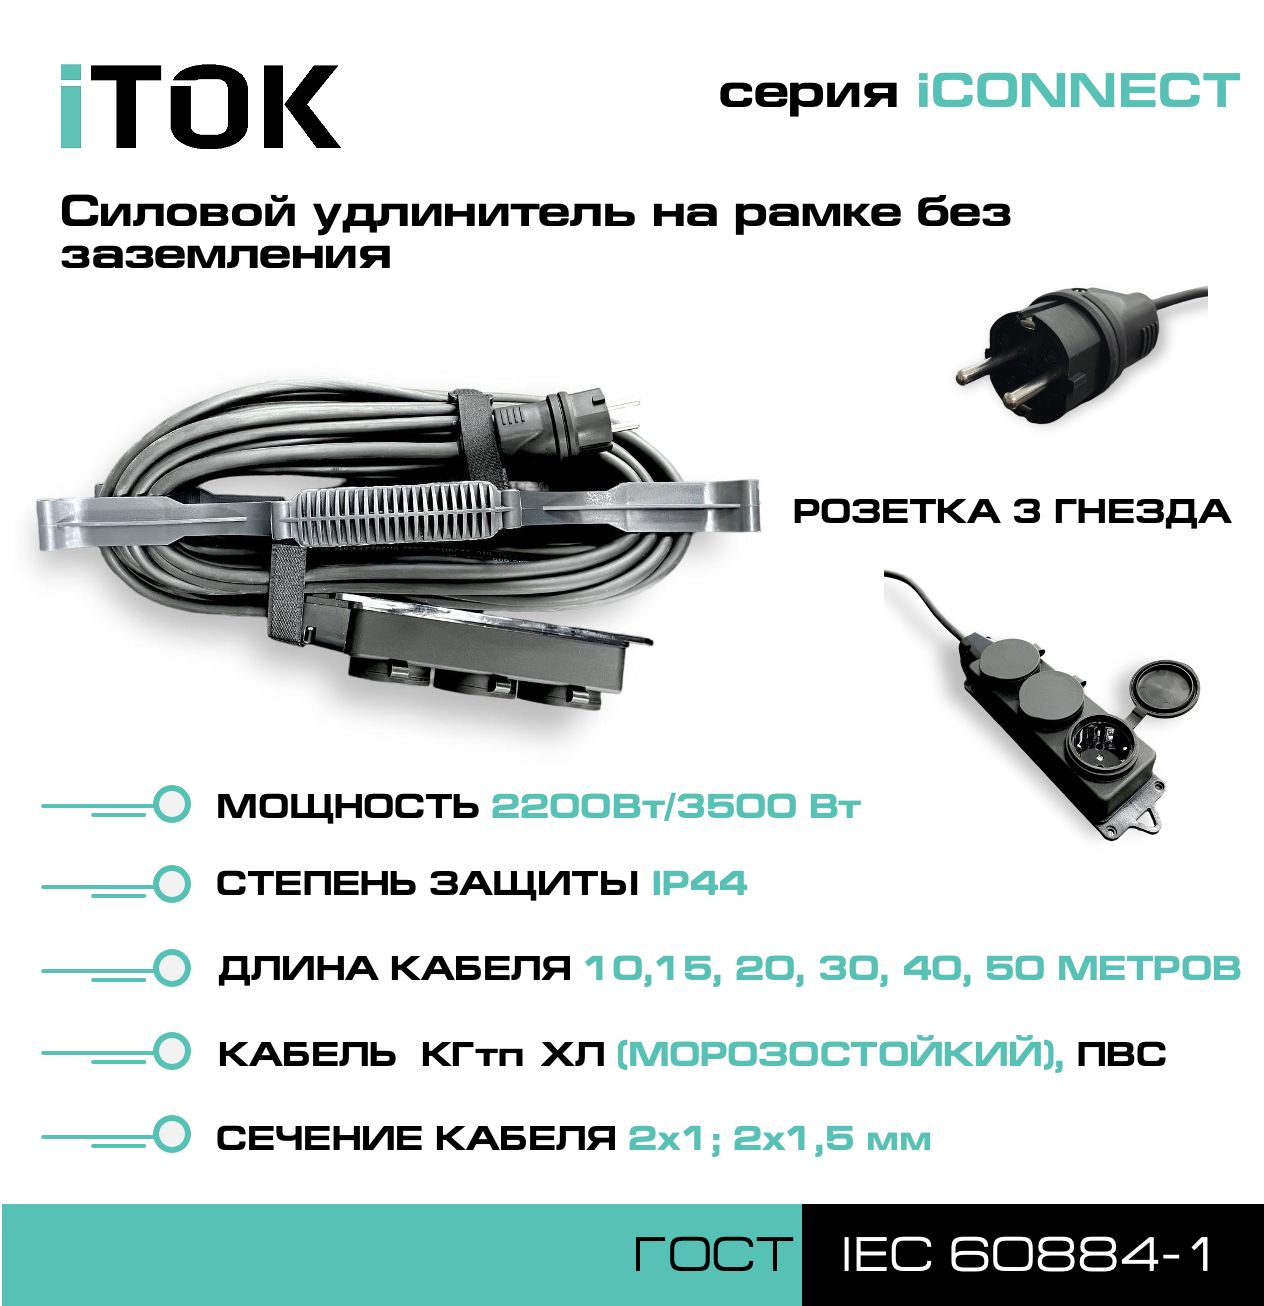 Удлинитель на рамке без земли серии iTOK iCONNECT КГтп-ХЛ 2х1,5 мм 3 гнезда IP44 20 м